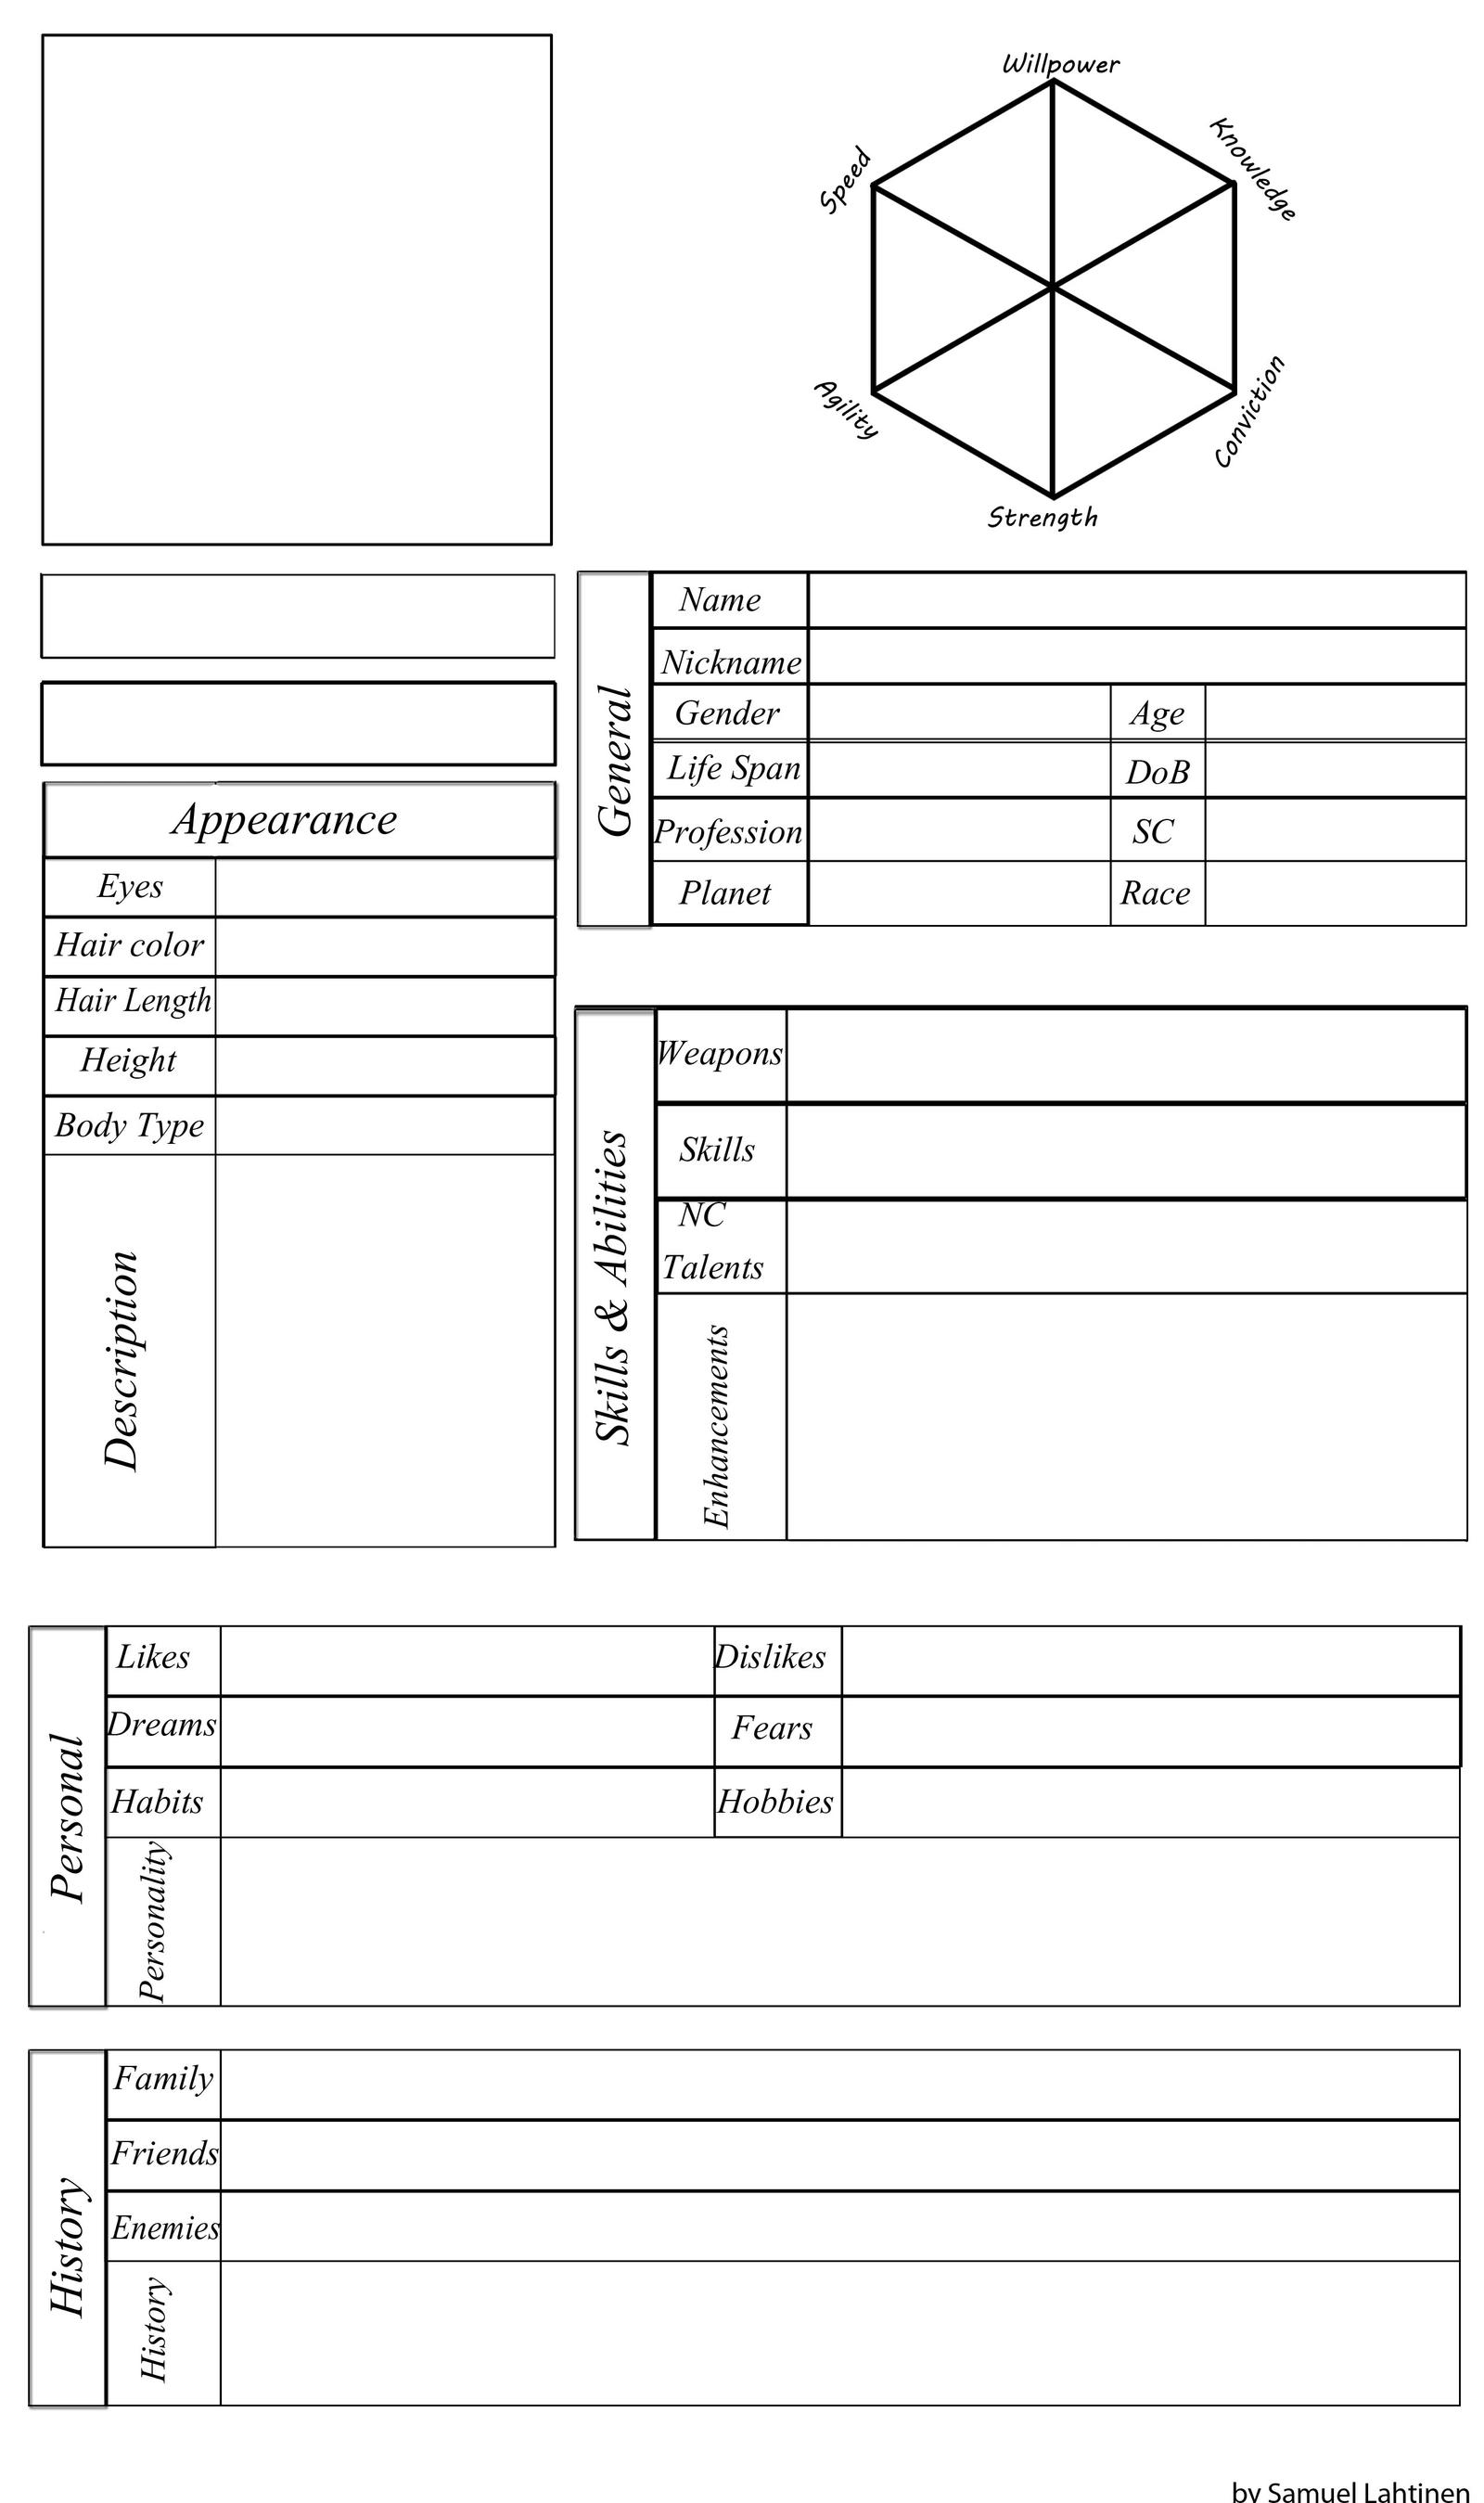 character-profile-sheets-for-character-development-http-fc08-deviantart-fs71-i-2012-0